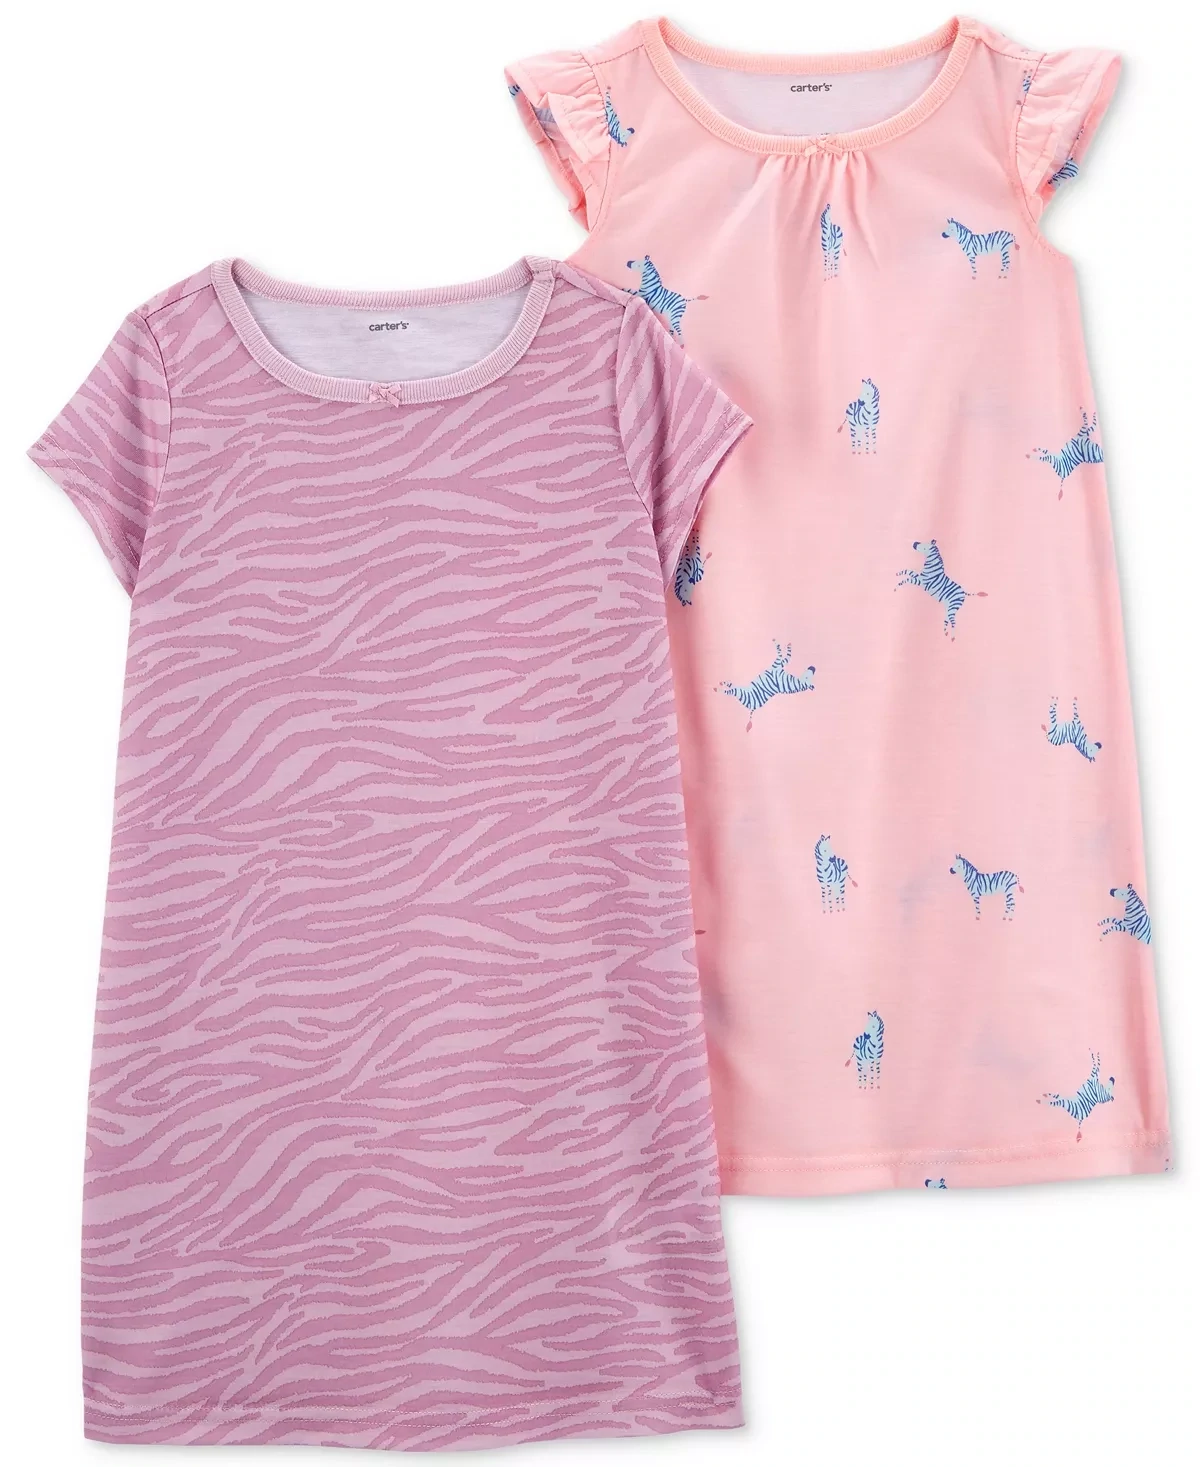 Carter's Toddler Girls 2-Pk. Nightgowns Set - Print - Size 5t/5A